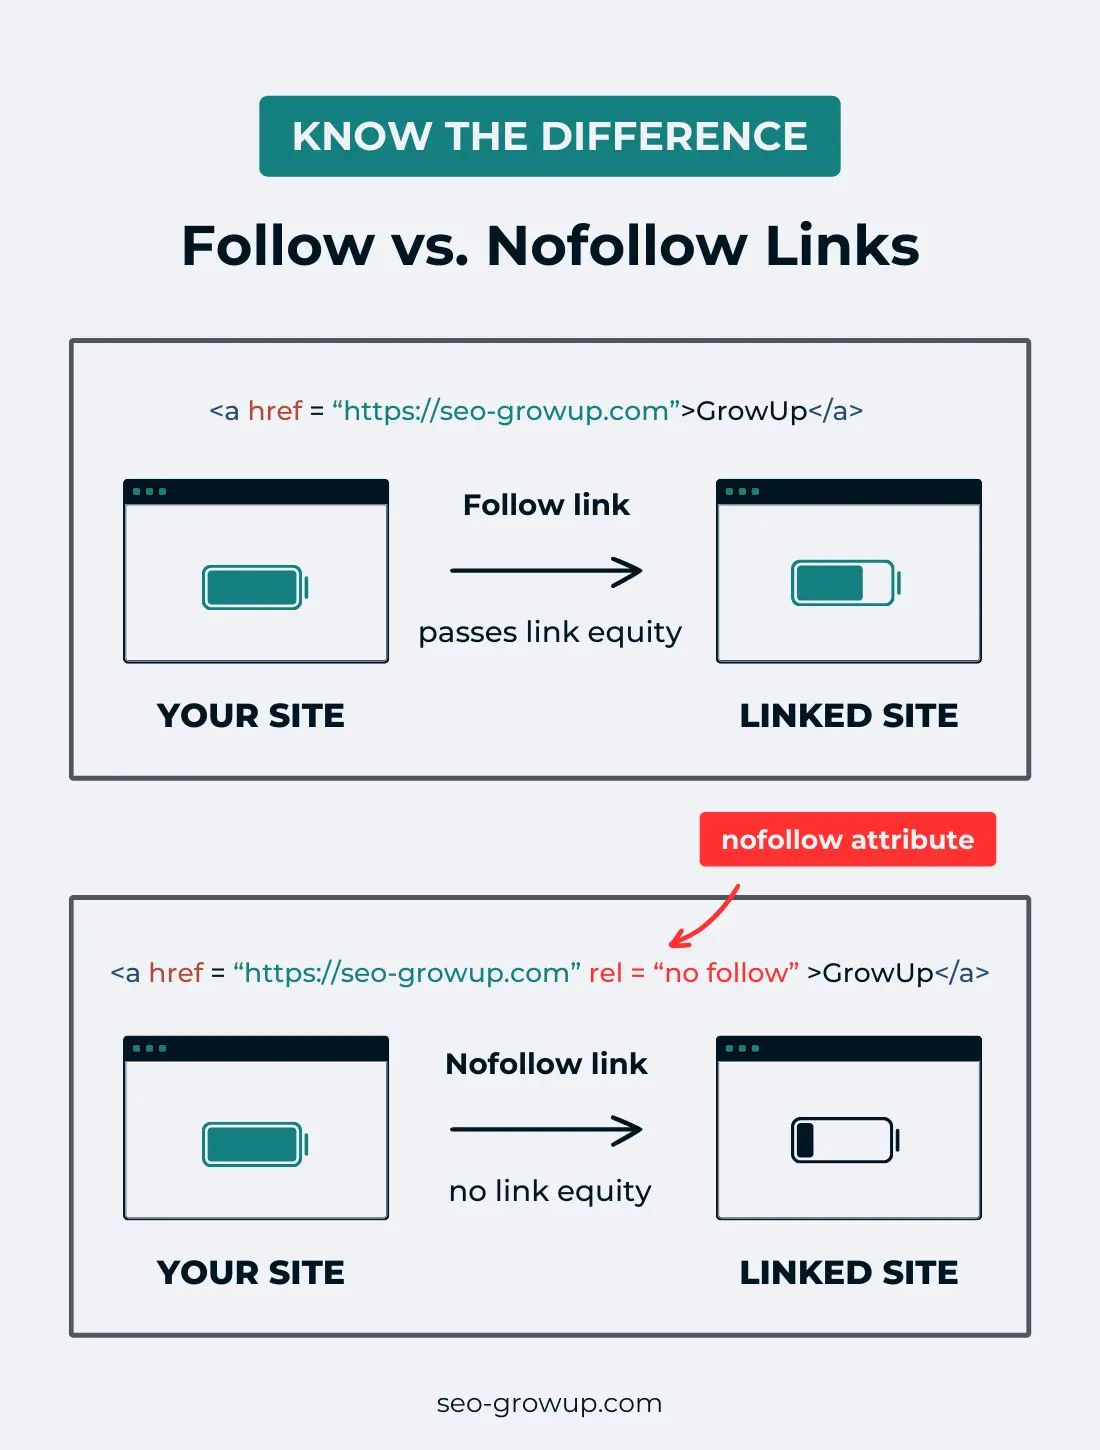 Difference between Follow vs Nofollow links